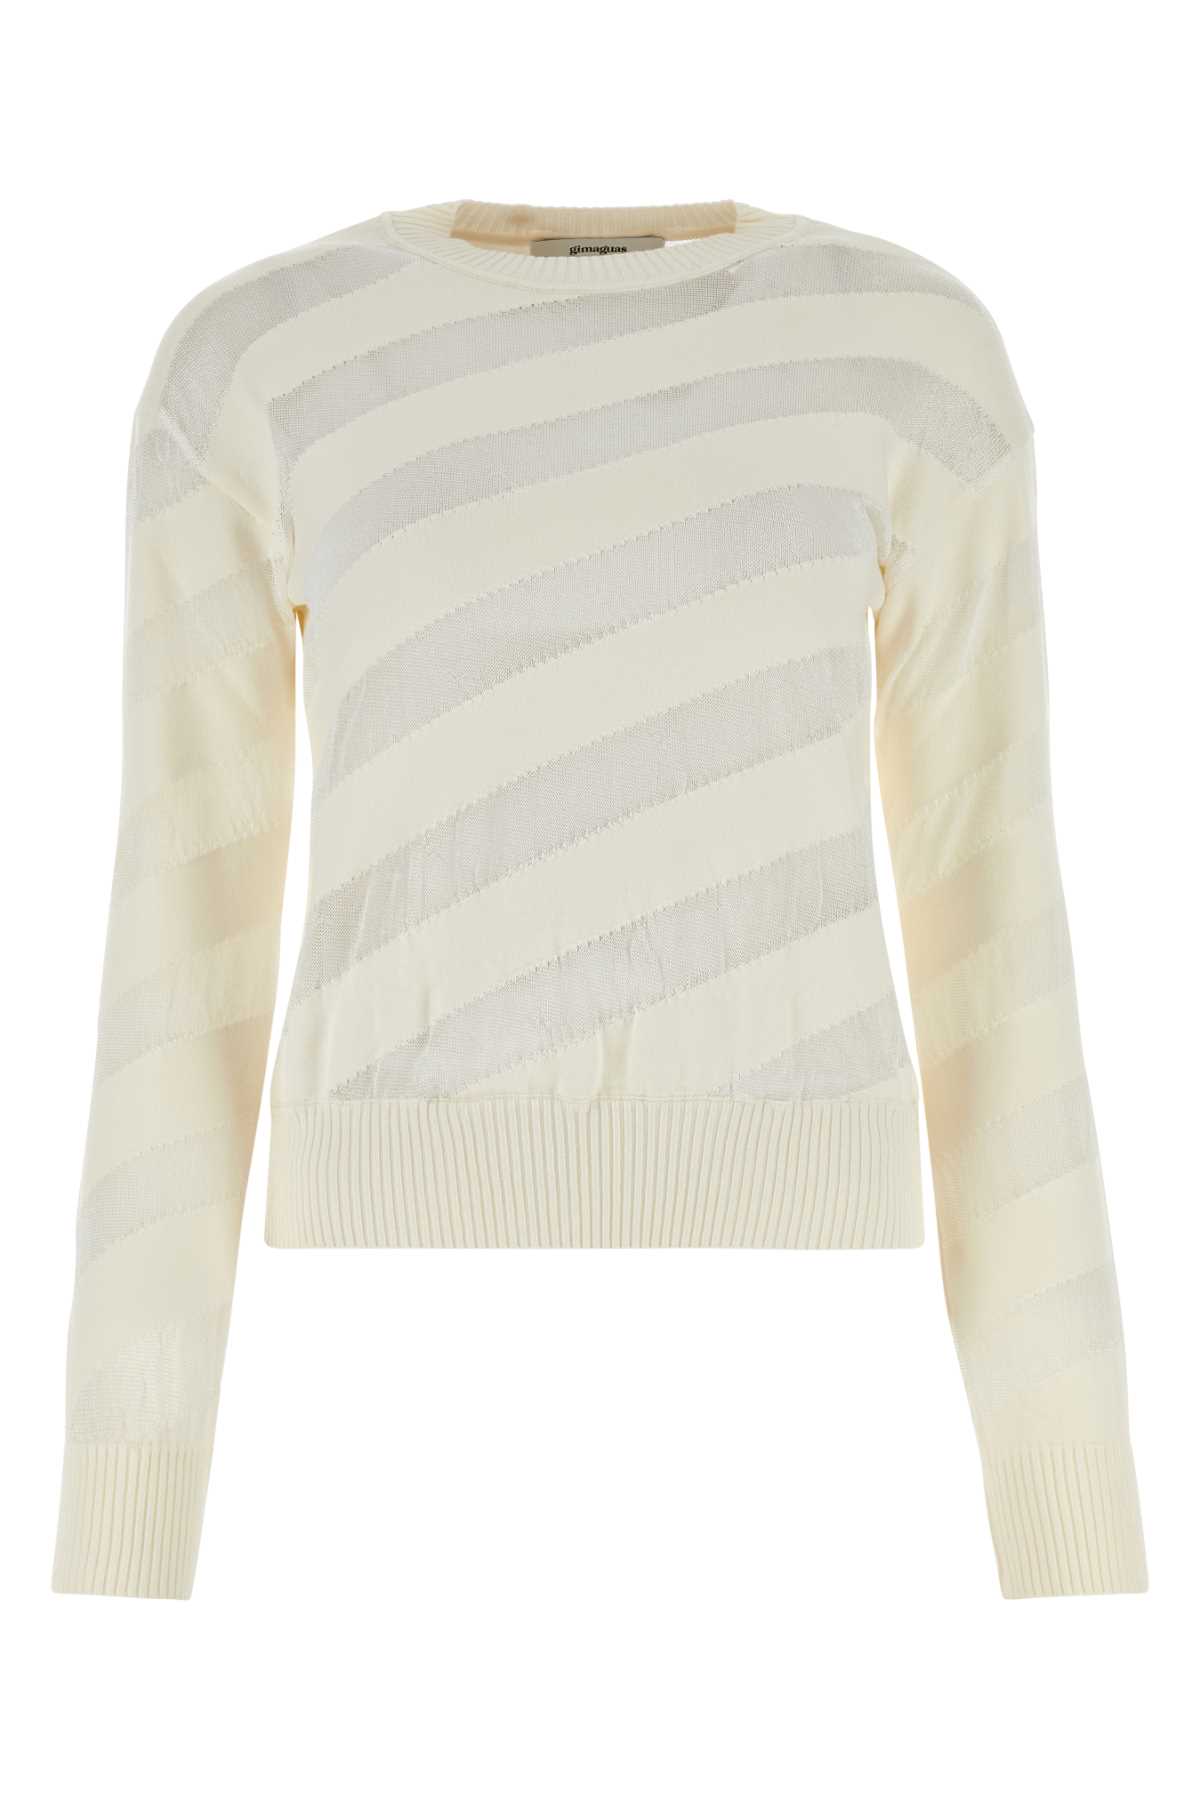 Shop Gimaguas White Polyester Blend Zebra Sweater